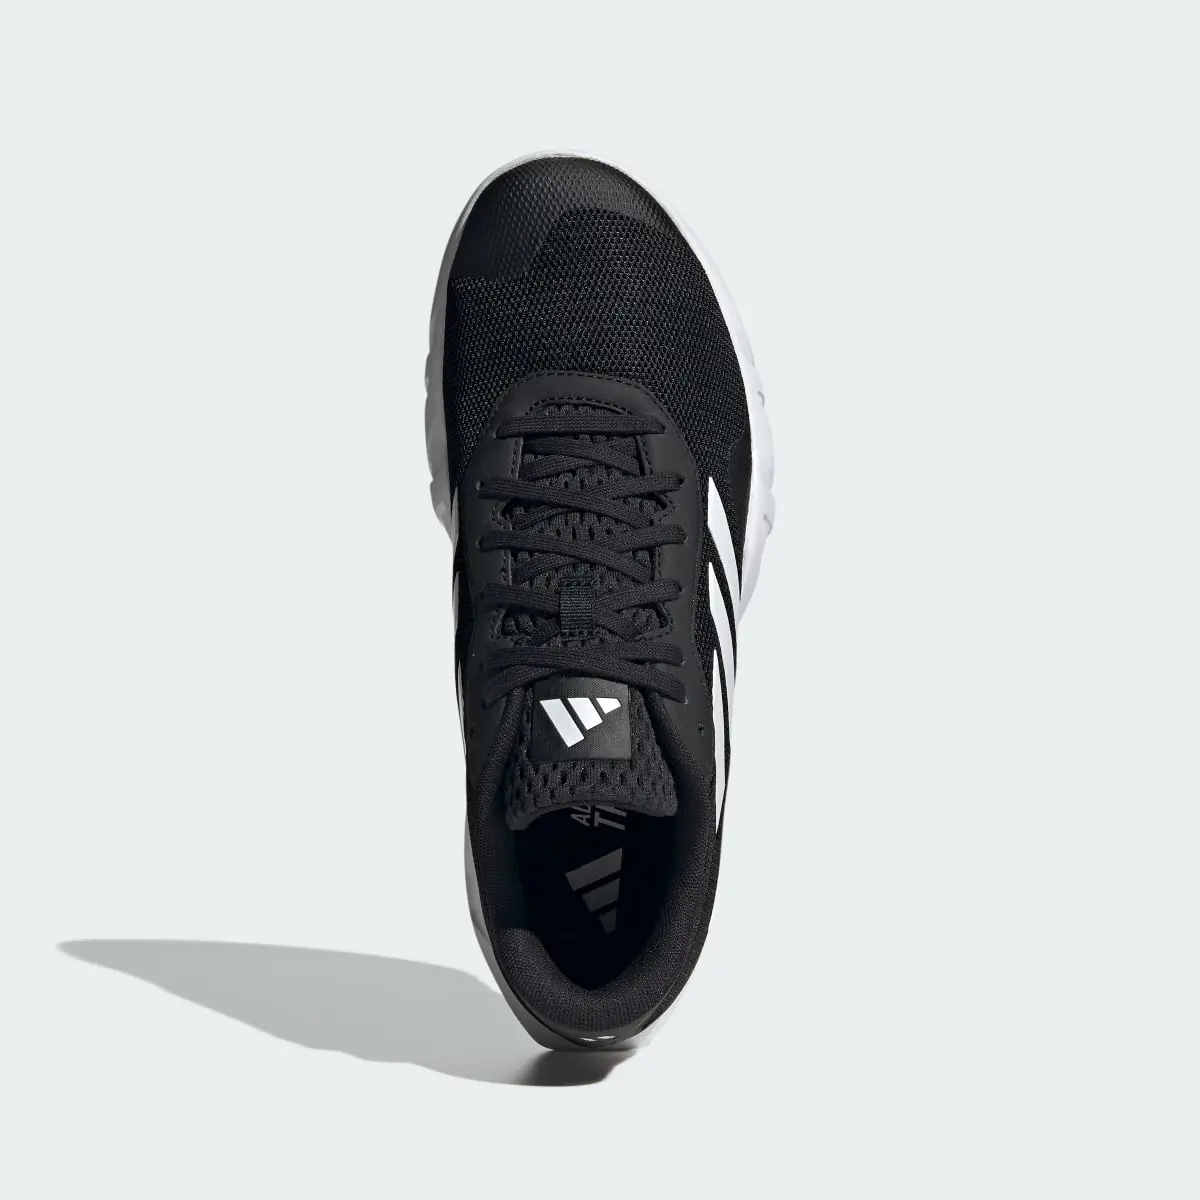 Adidas Amplimove Trainer Schuh. 3